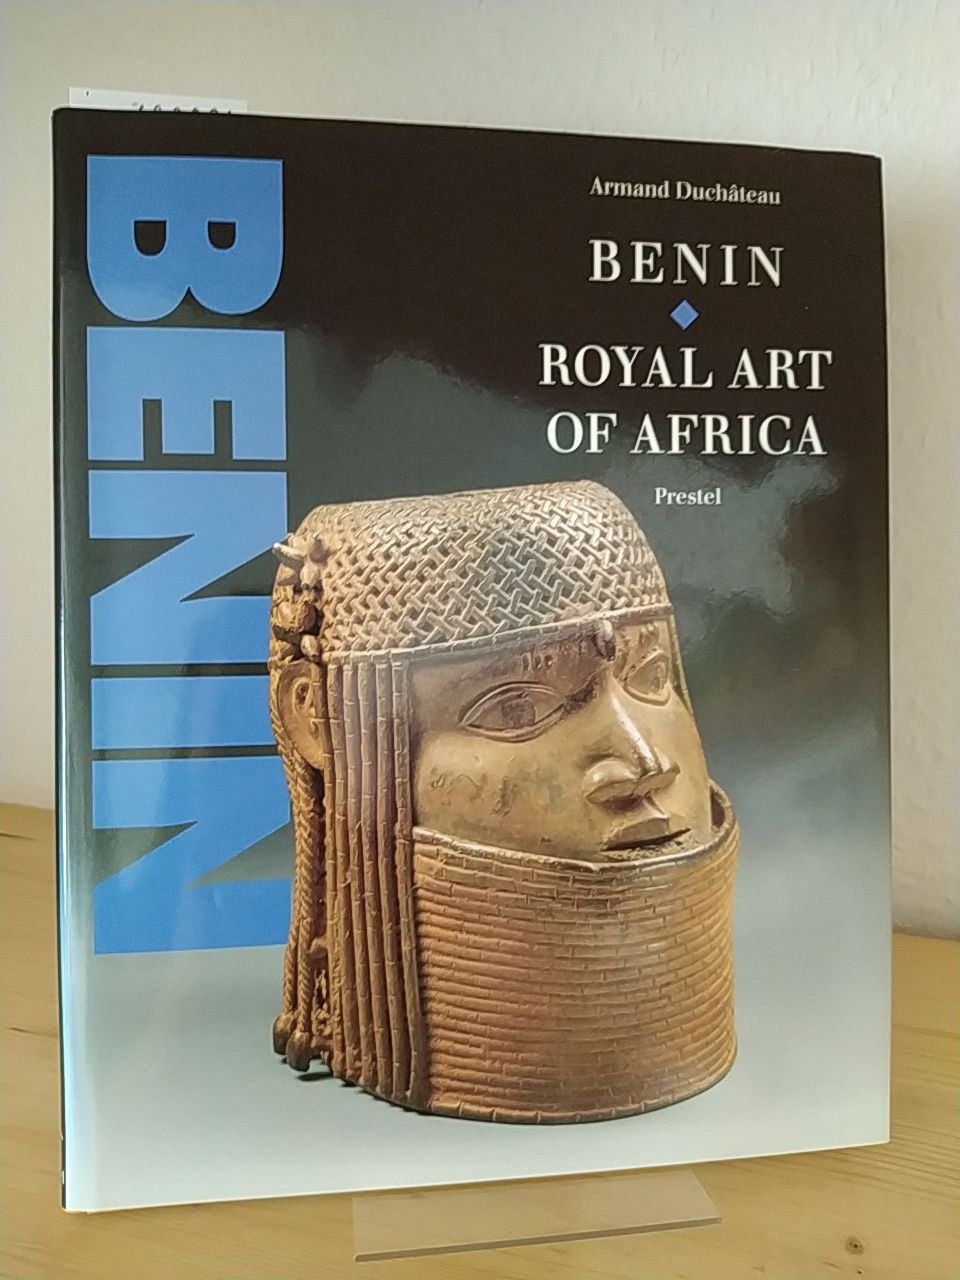 Benin. Royal art of Africa from the Museum für Völkerkunde, Vienna. [By Armand Duchateau]. - Duchateau, Armand